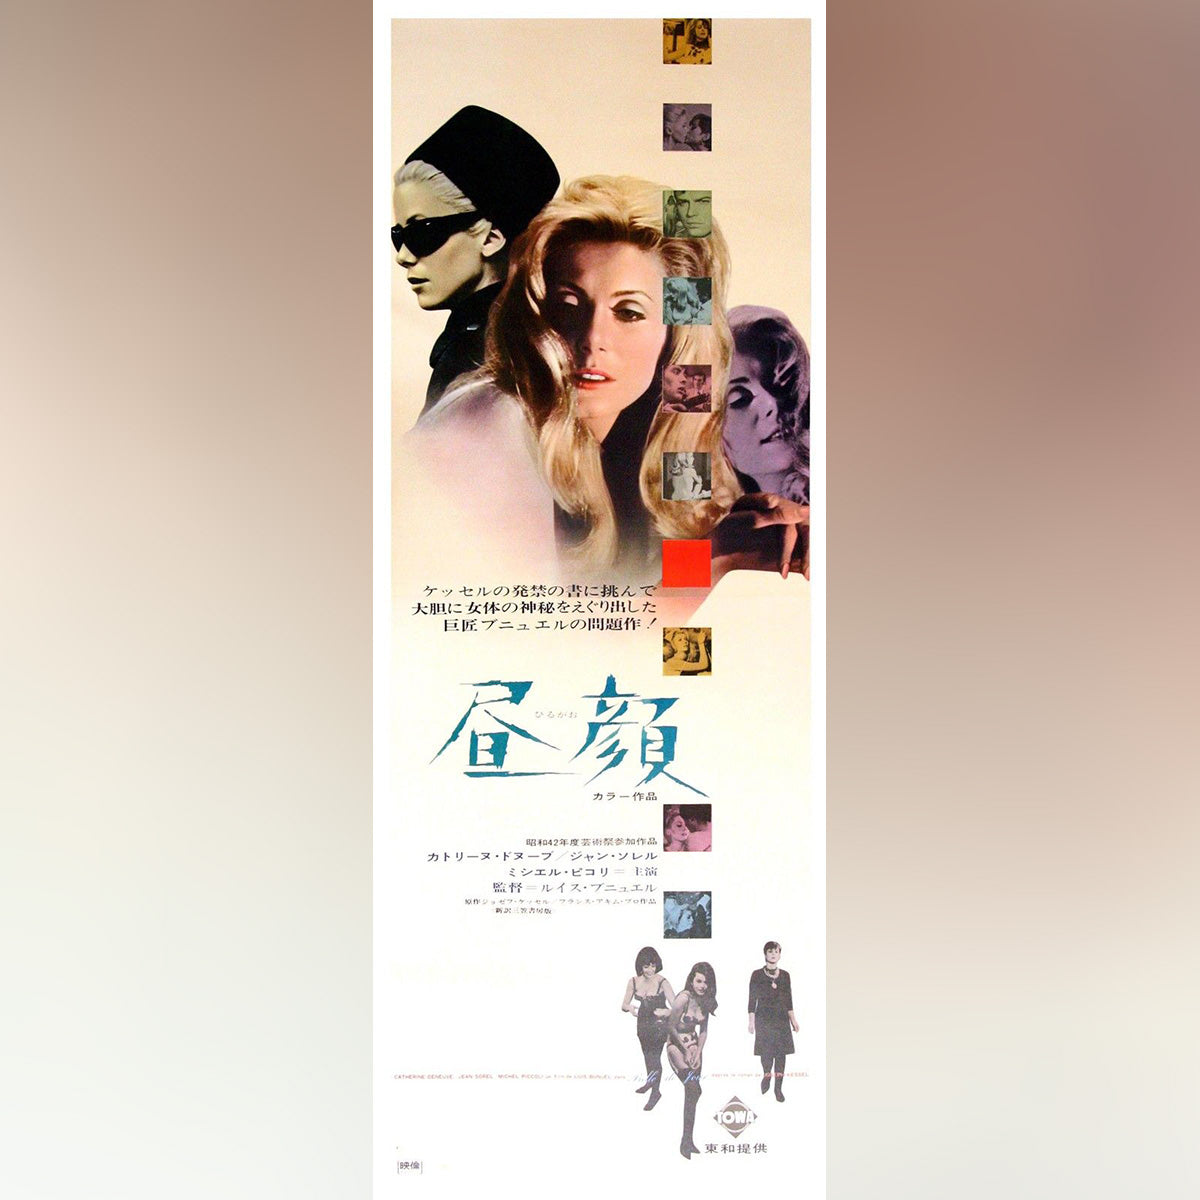 Original Movie Poster of Belle De Jour (1967)